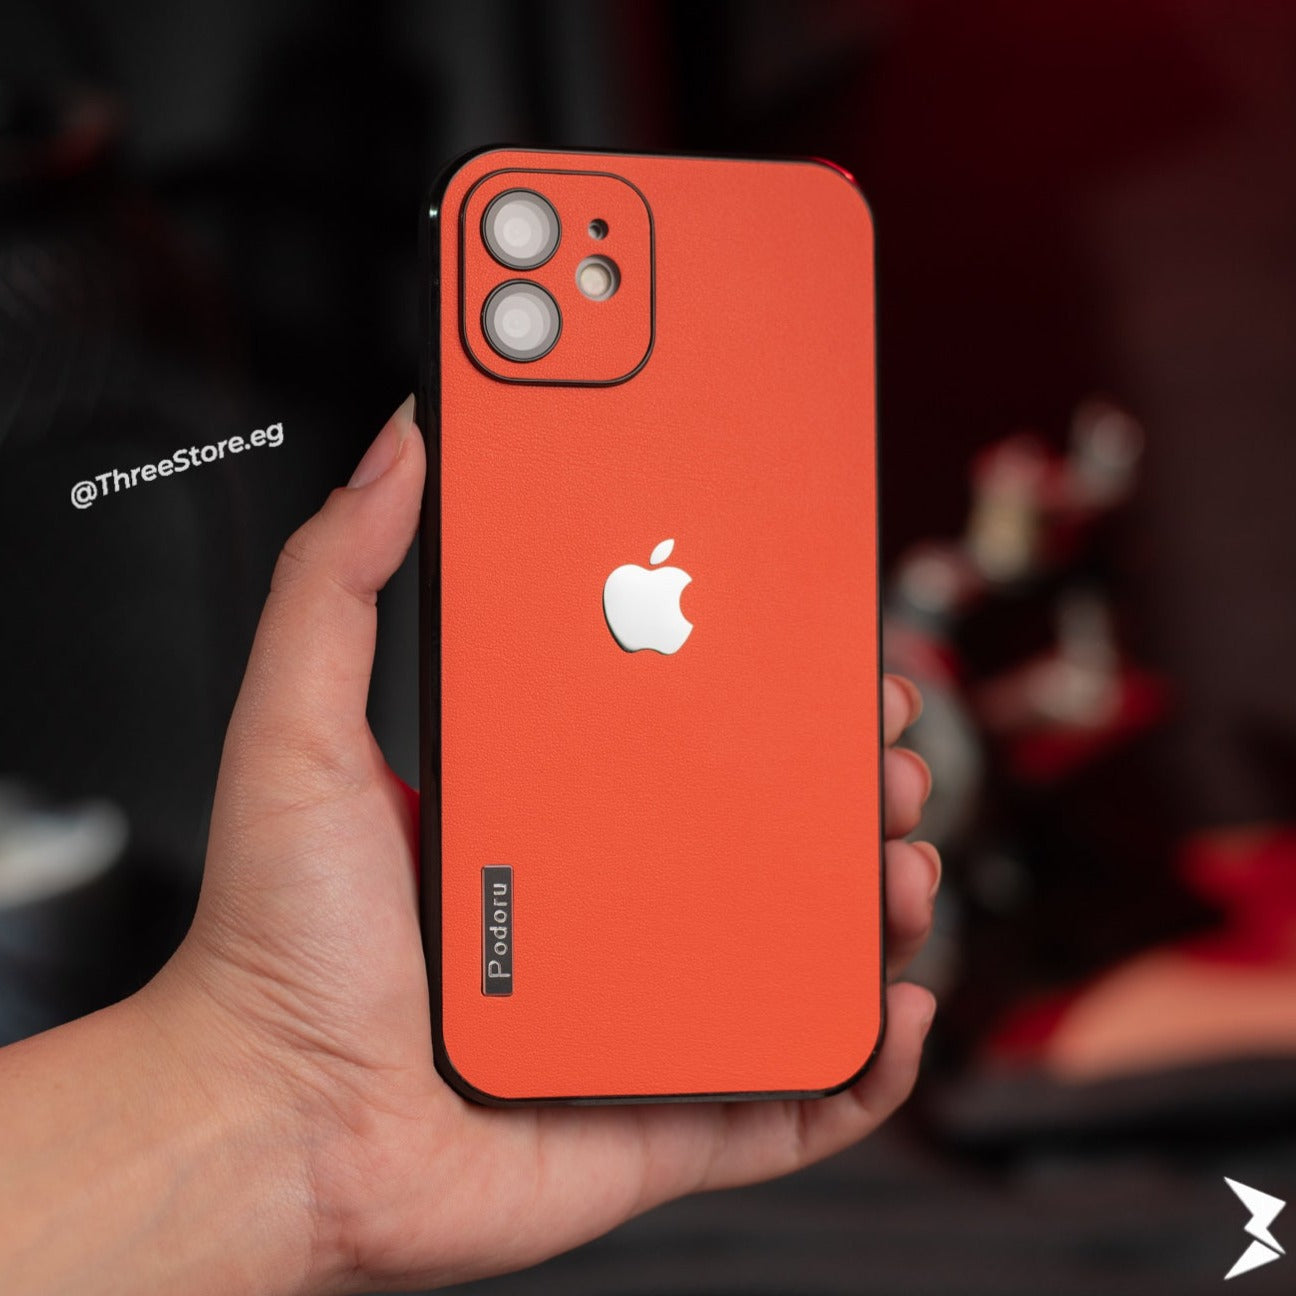 Podoru ShockProof Leather Case iPhone 12 Three store